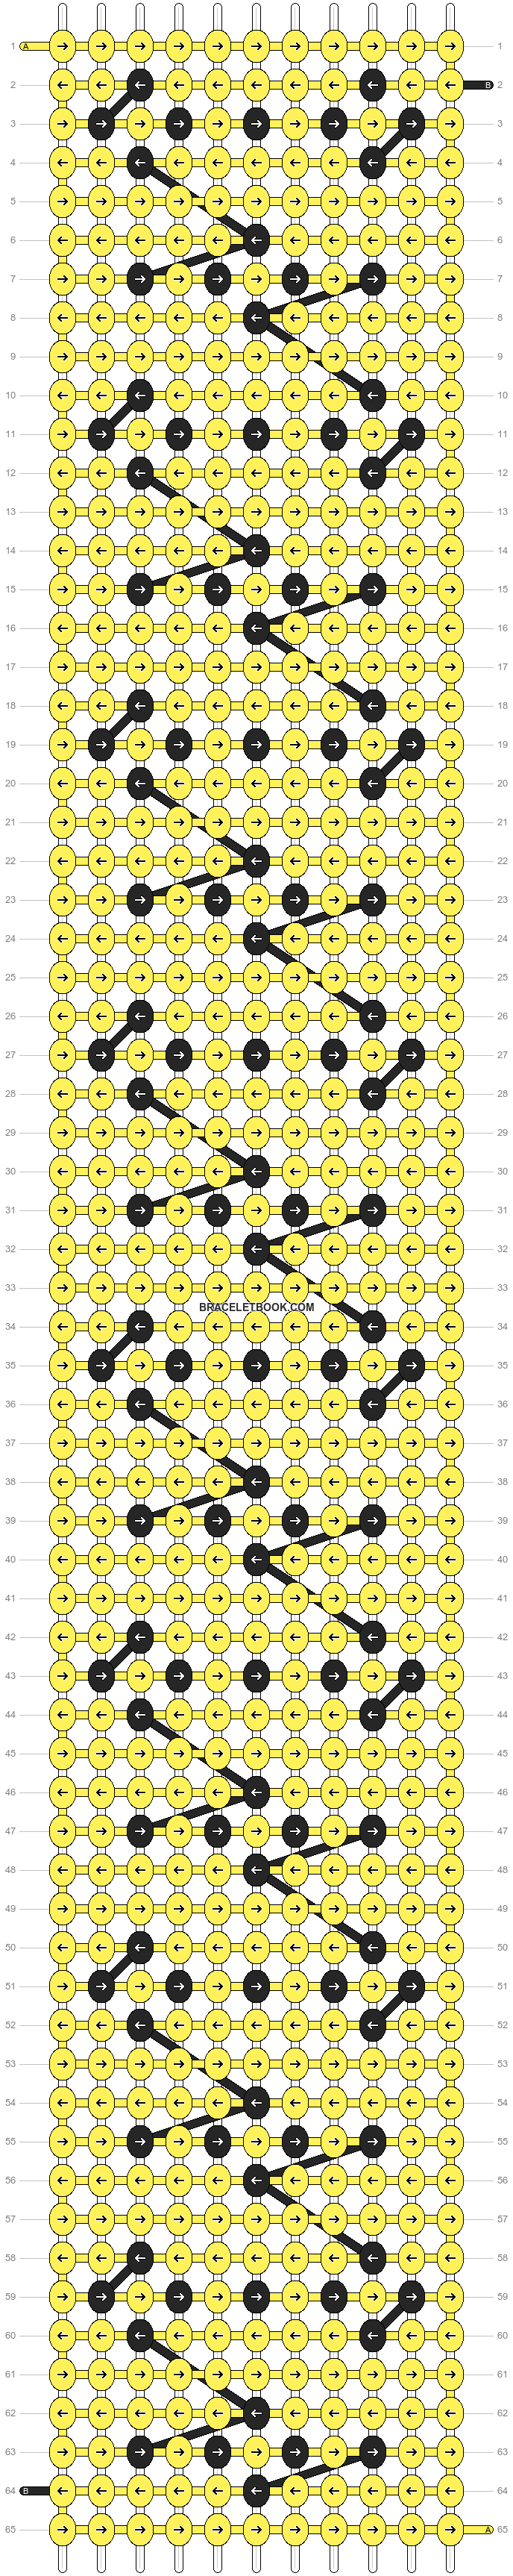 Alpha pattern #64239 variation #119141 pattern